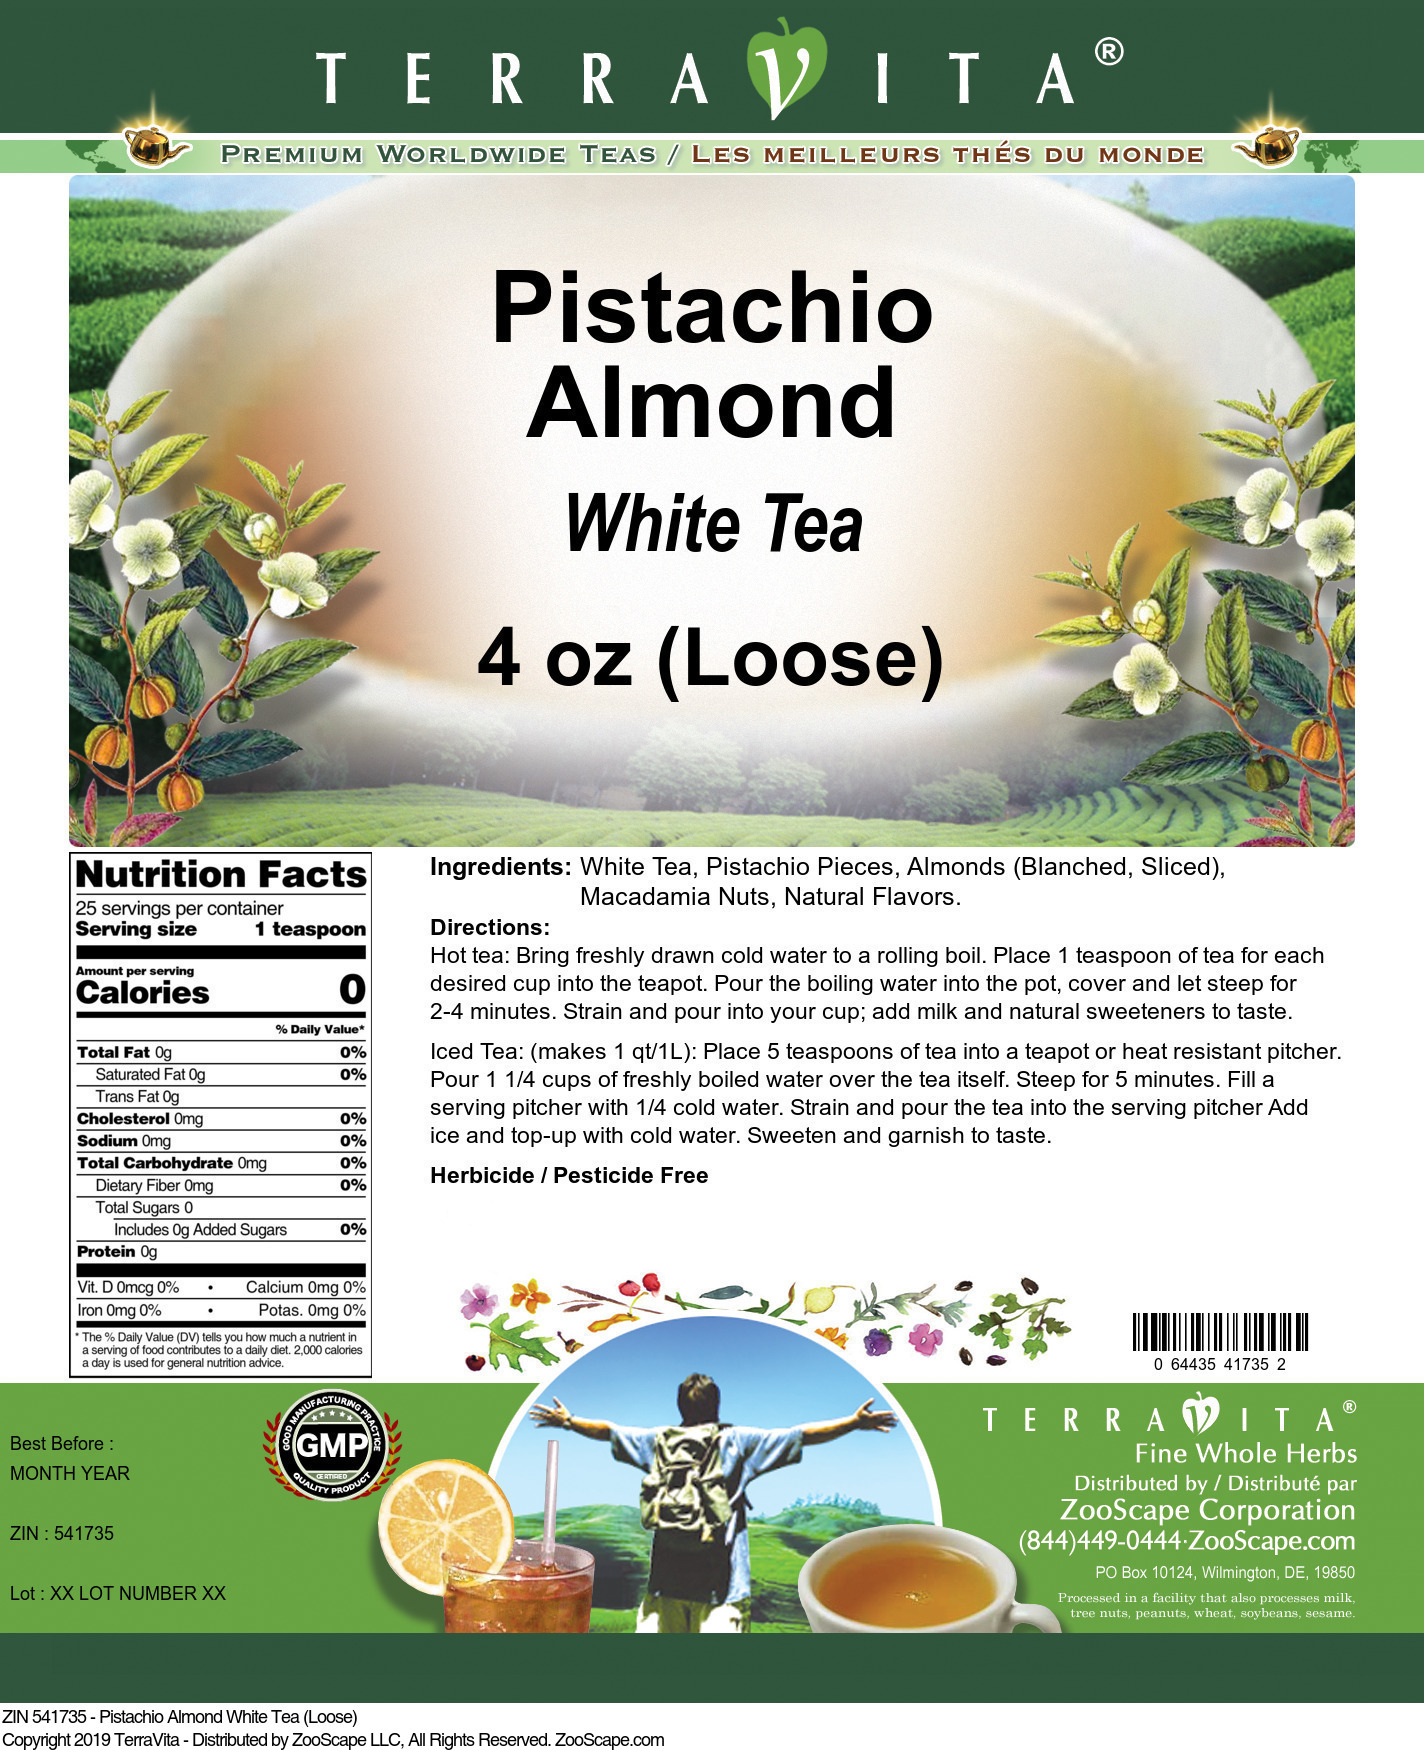 Pistachio Almond White Tea (Loose) - Label